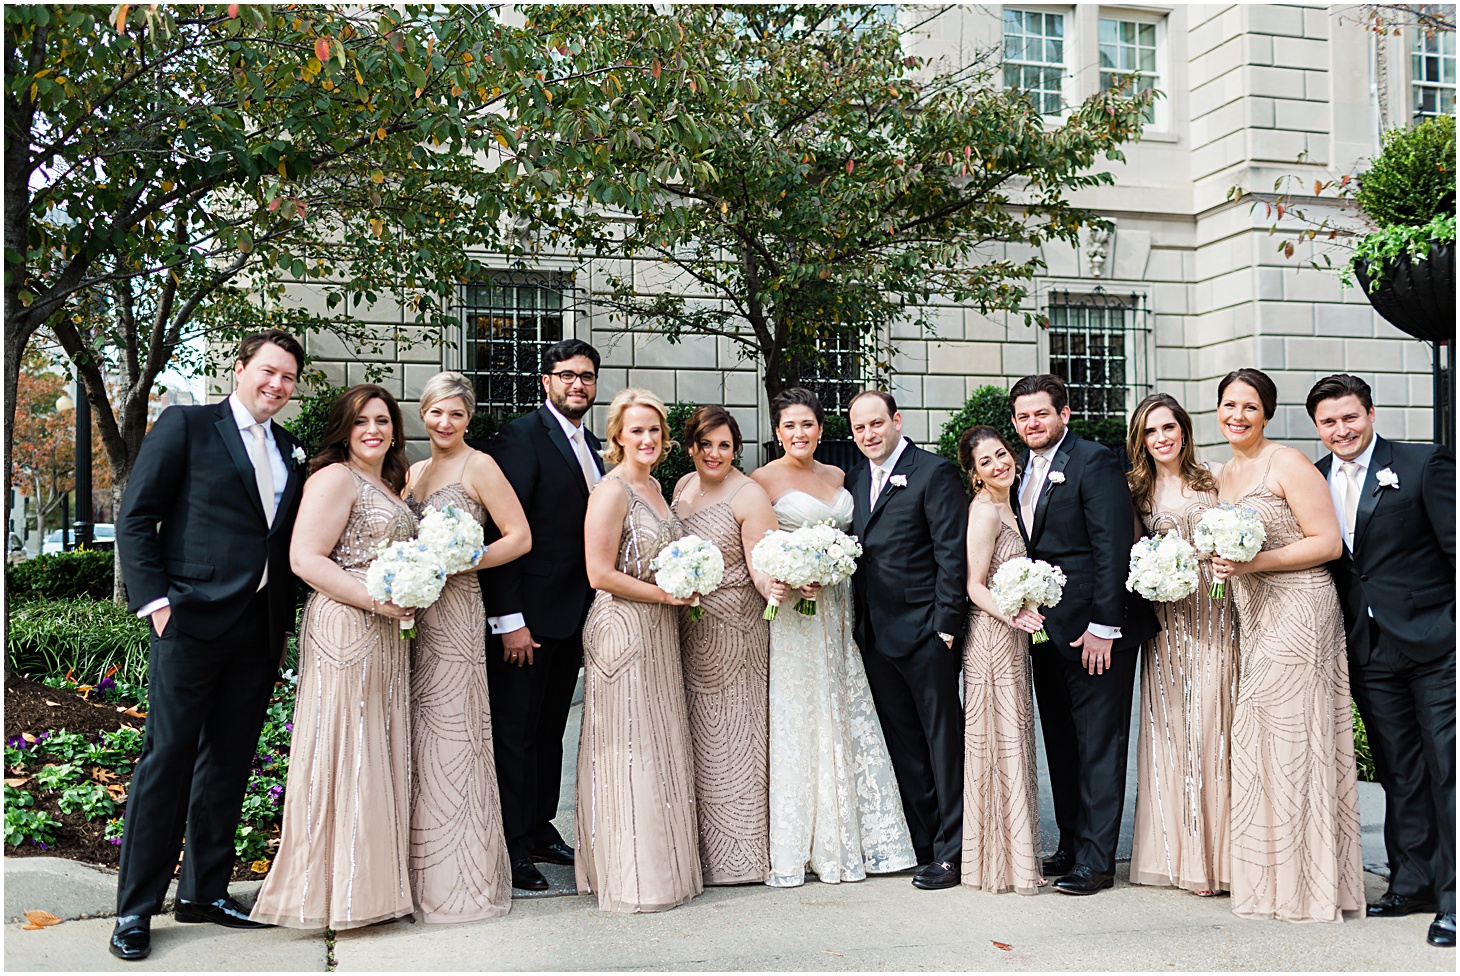 Hay-Adams Wedding party | Top Washington DC wedding photographer Sarah Bradshaw